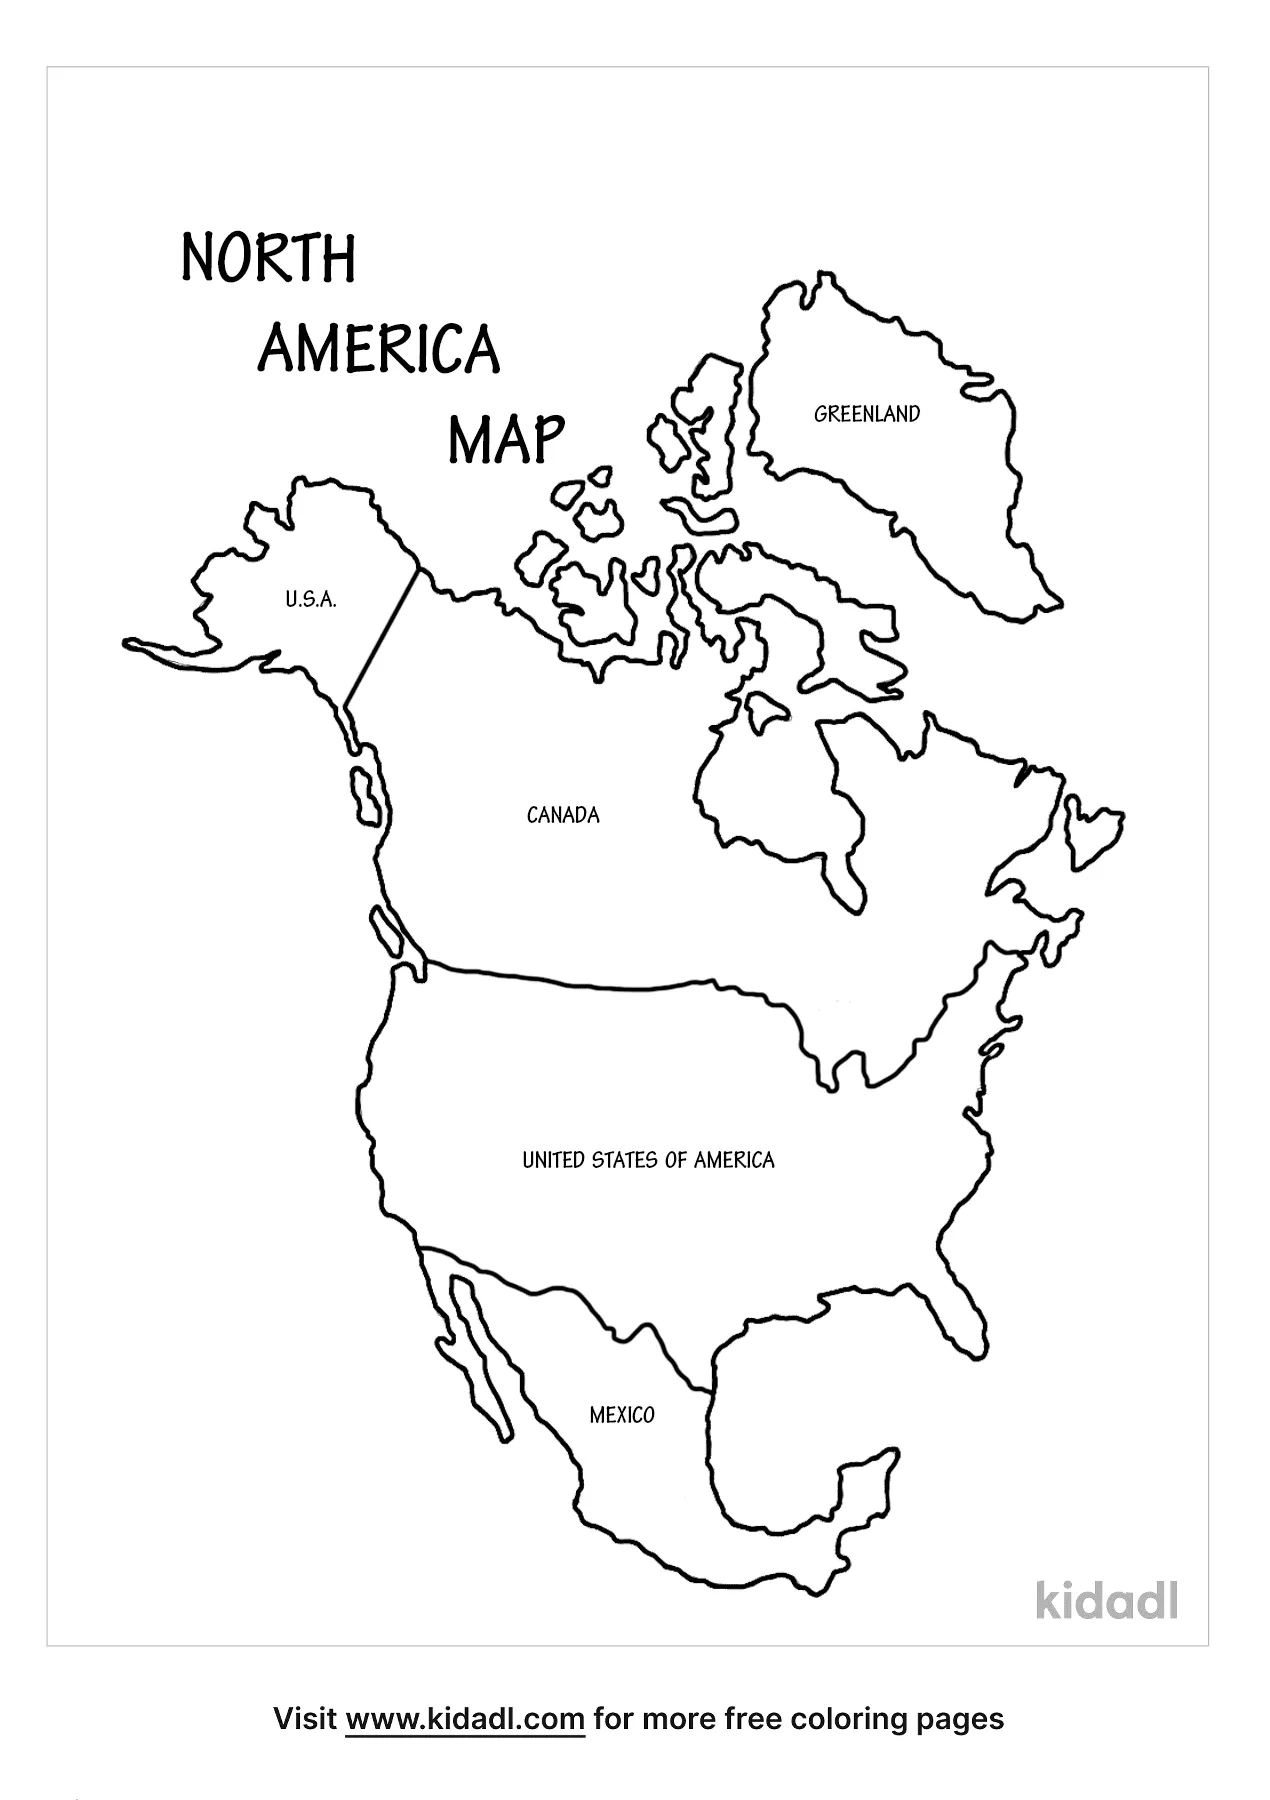 north america map kidadl